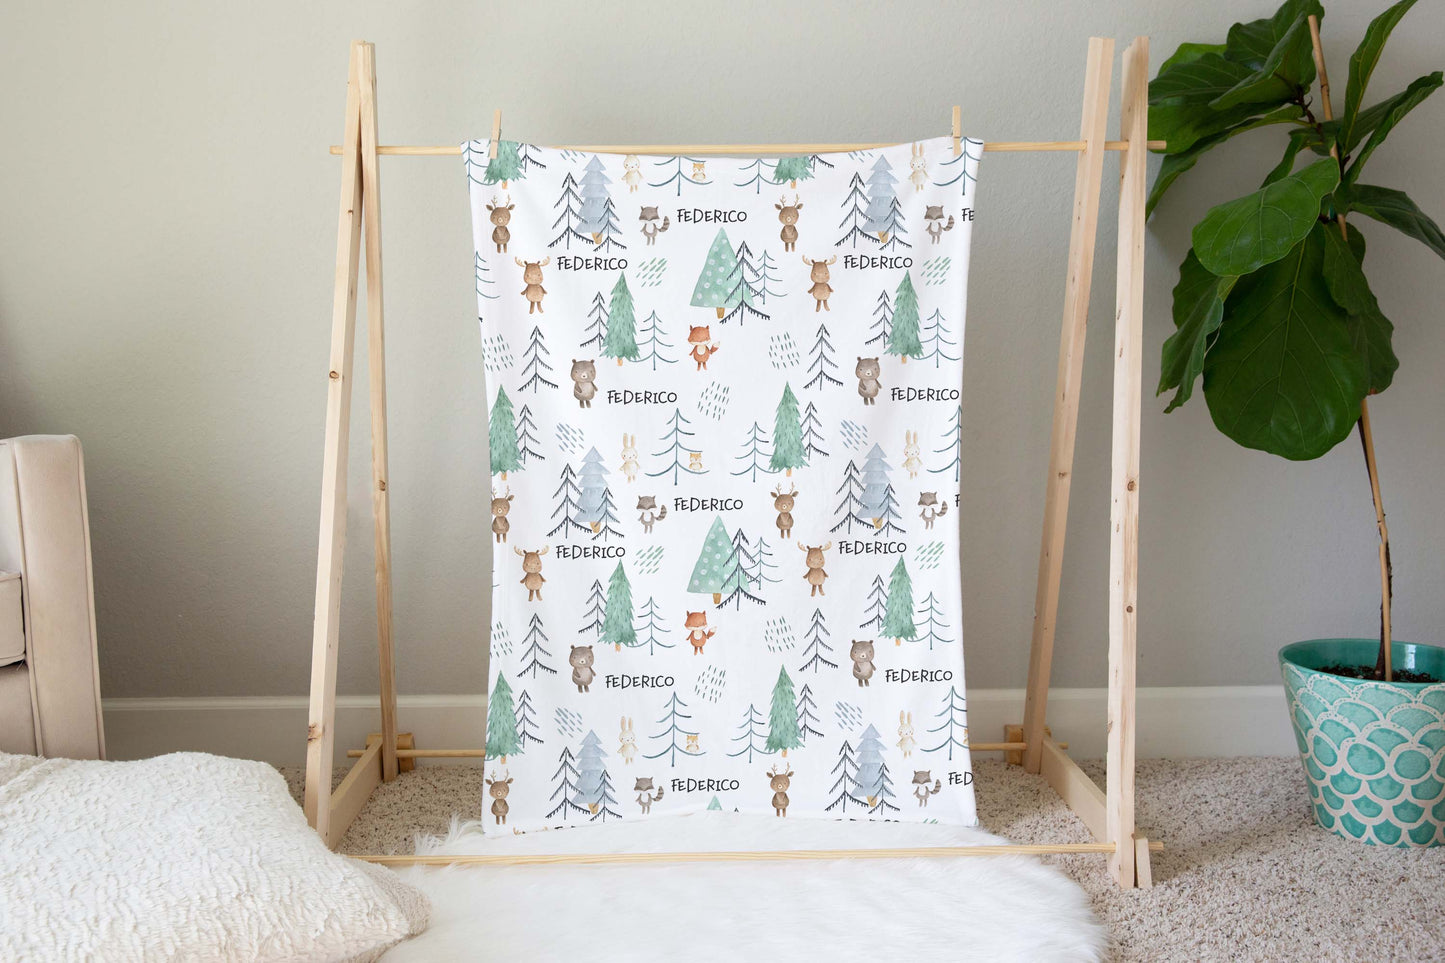 Woodland animals Personalized Minky Blanket, Forest Nursery Bedding - Scandi Woodland